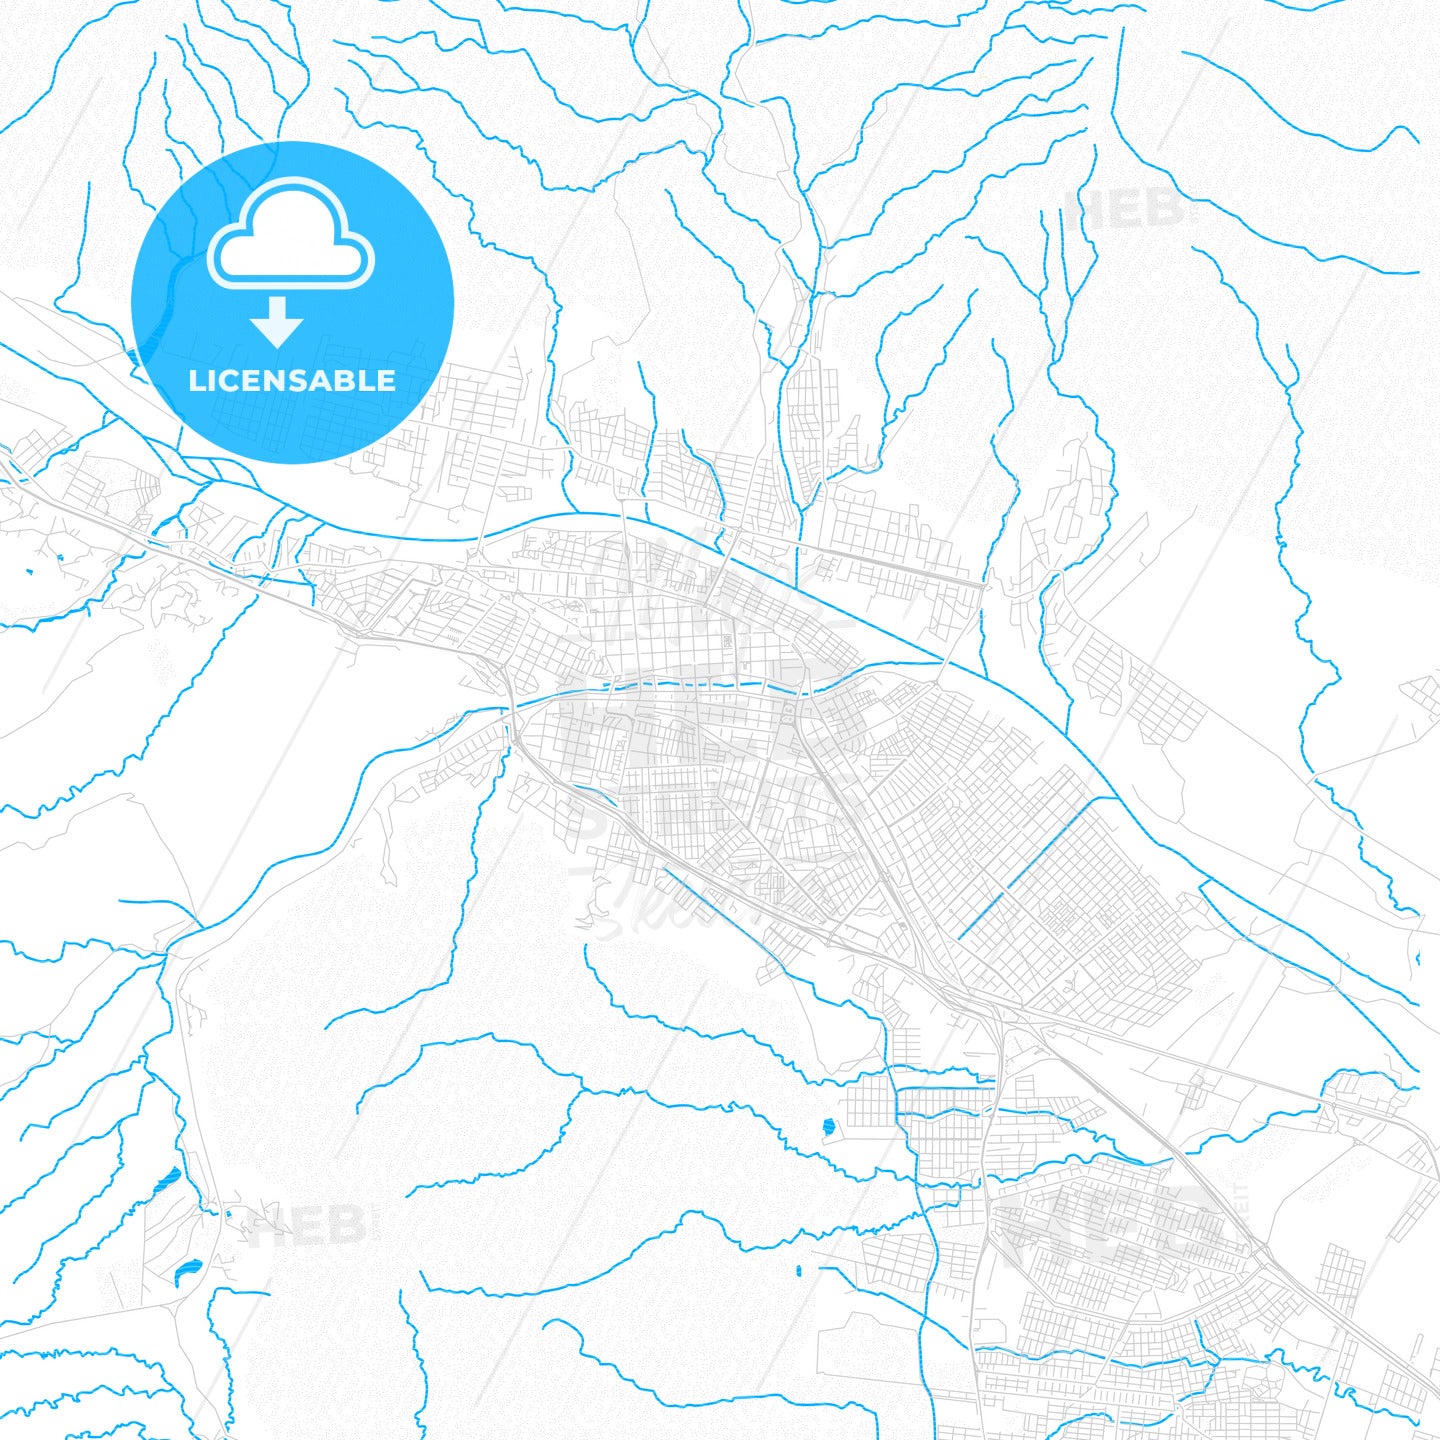 San Salvador de Jujuy, Argentina PDF vector map with water in focus